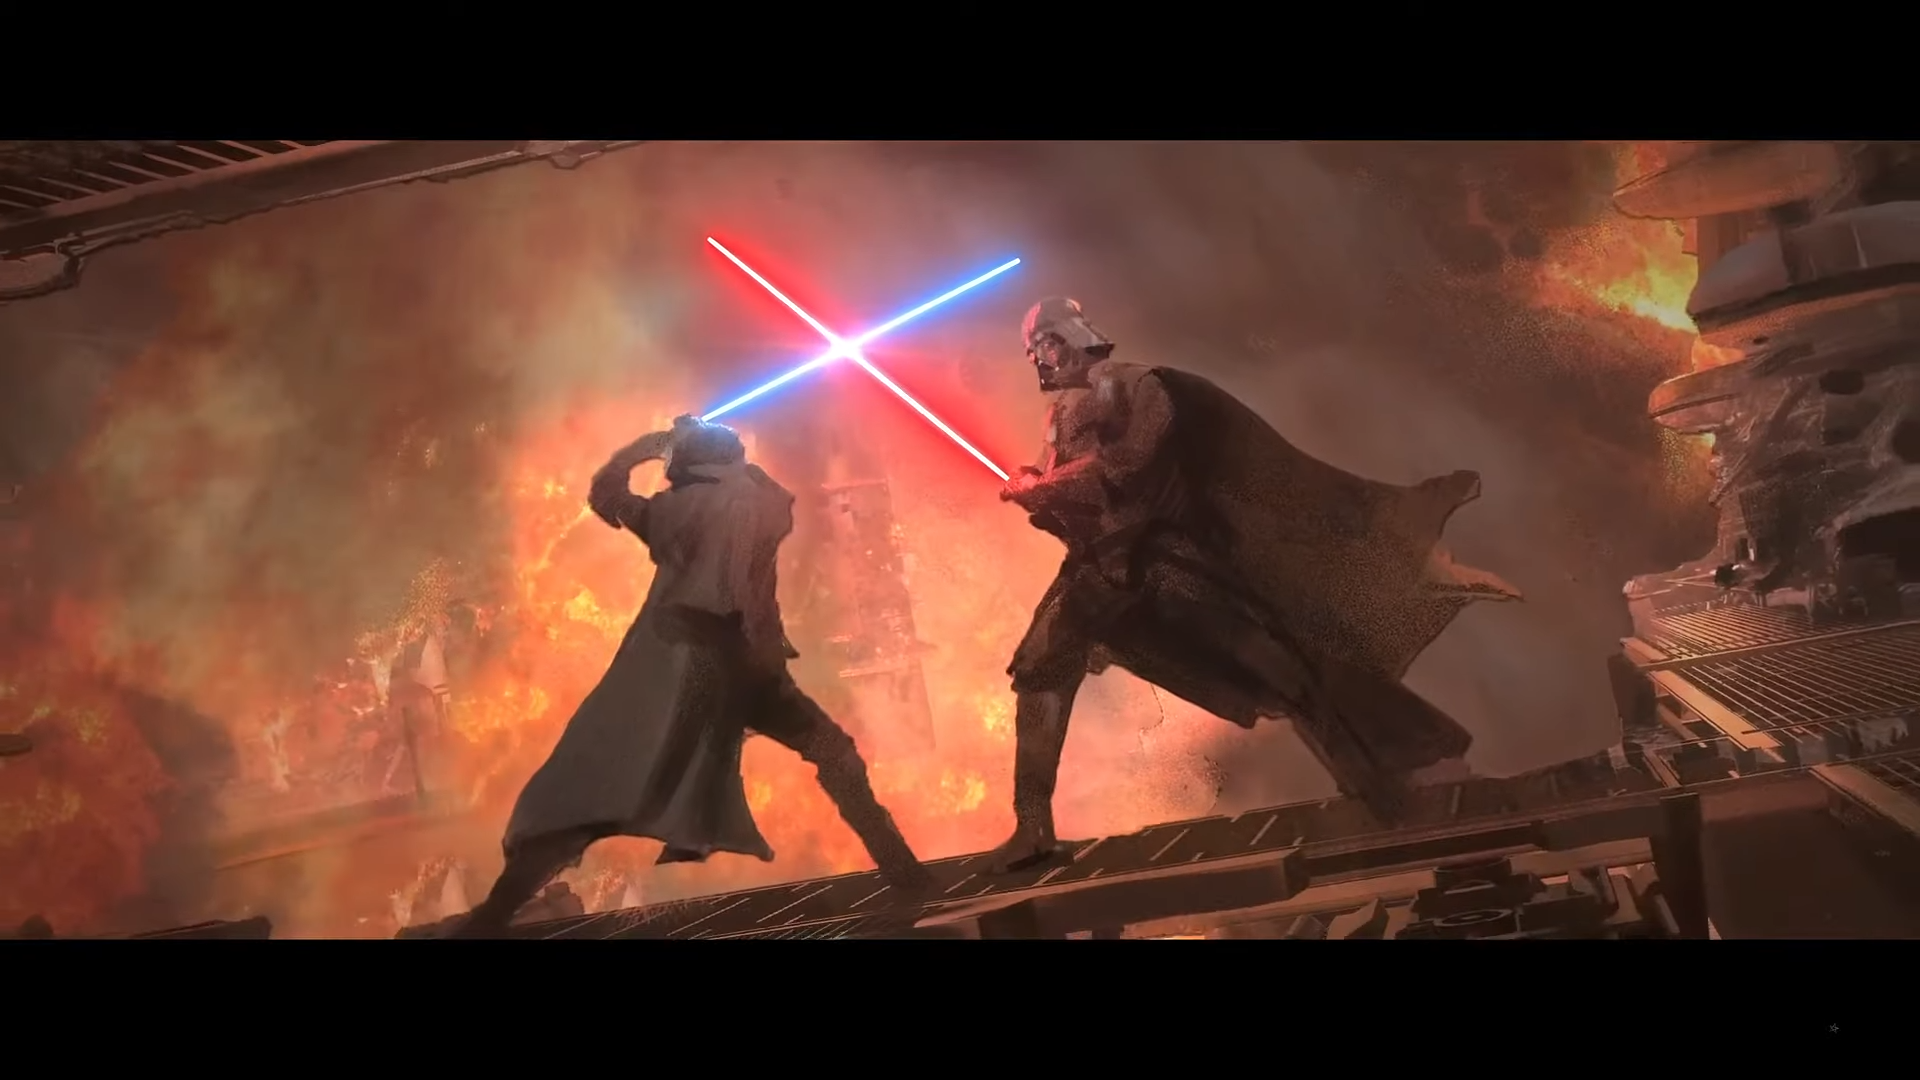 Obi Wan Kenobi Teaser: 4 Major Reveals About The Disney Plus Star Wars Series